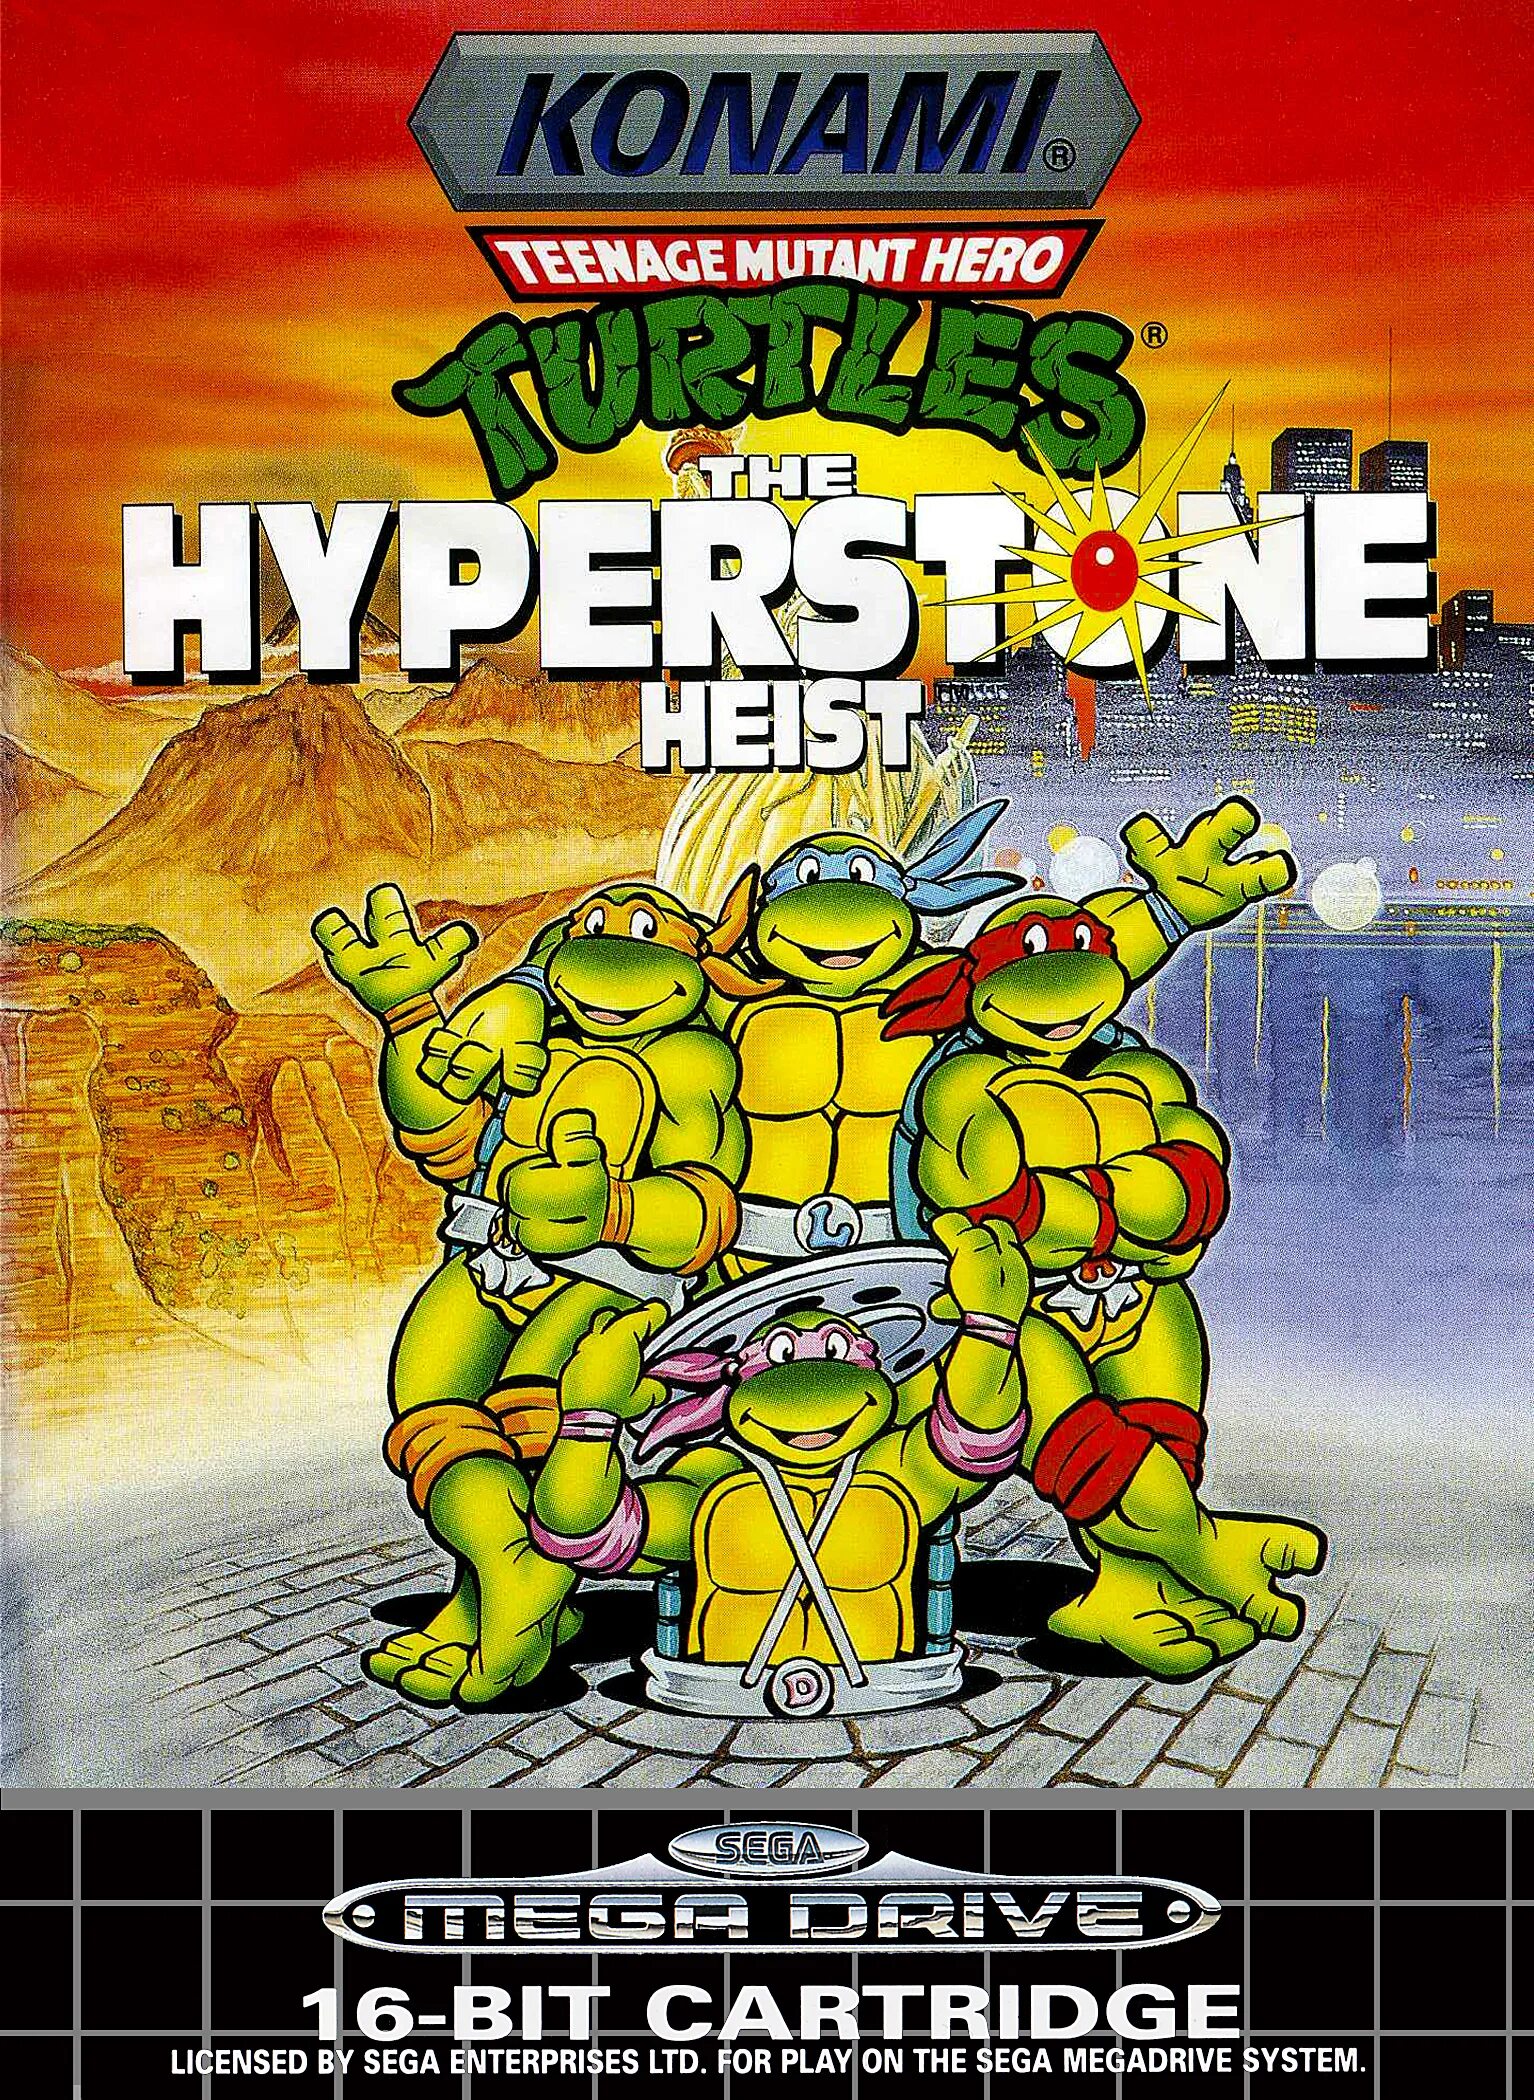 Teenage Mutant Ninja Turtles the Hyperstone Heist. Teenage Mutant Ninja Turtles the Hyperstone Heist Sega обложка. Черепашки ниндзя Hyperstone Heist. Teenage Mutant Ninja Turtles: the Hyperstone Heist (Sega Genesis). Tmnt sega